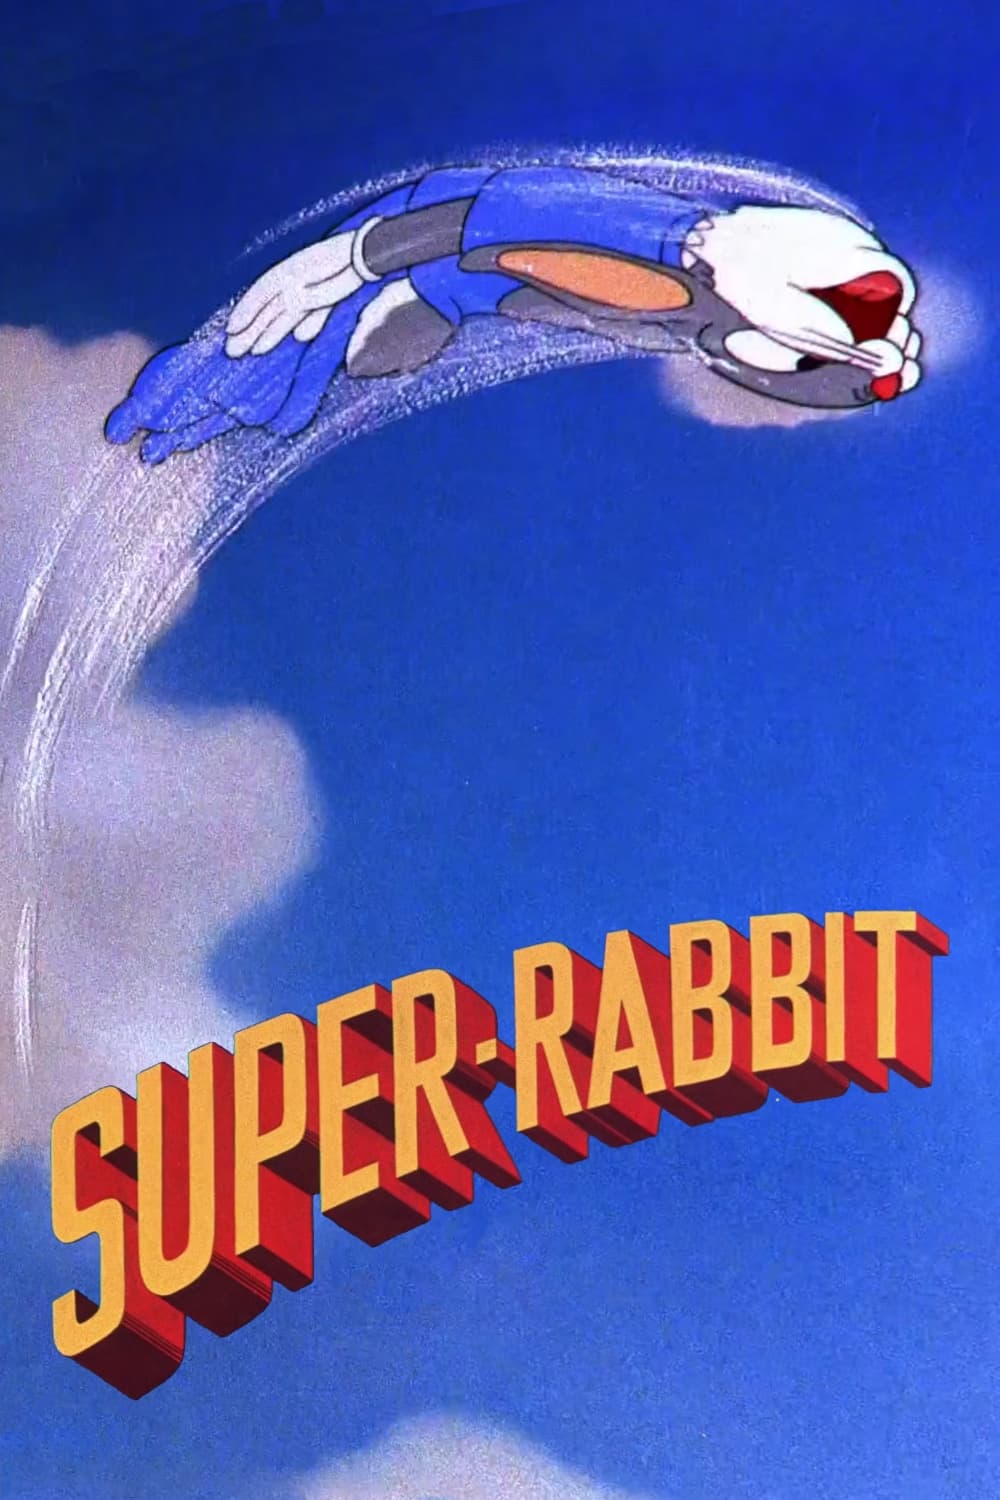 Super-Rabbit (1943)